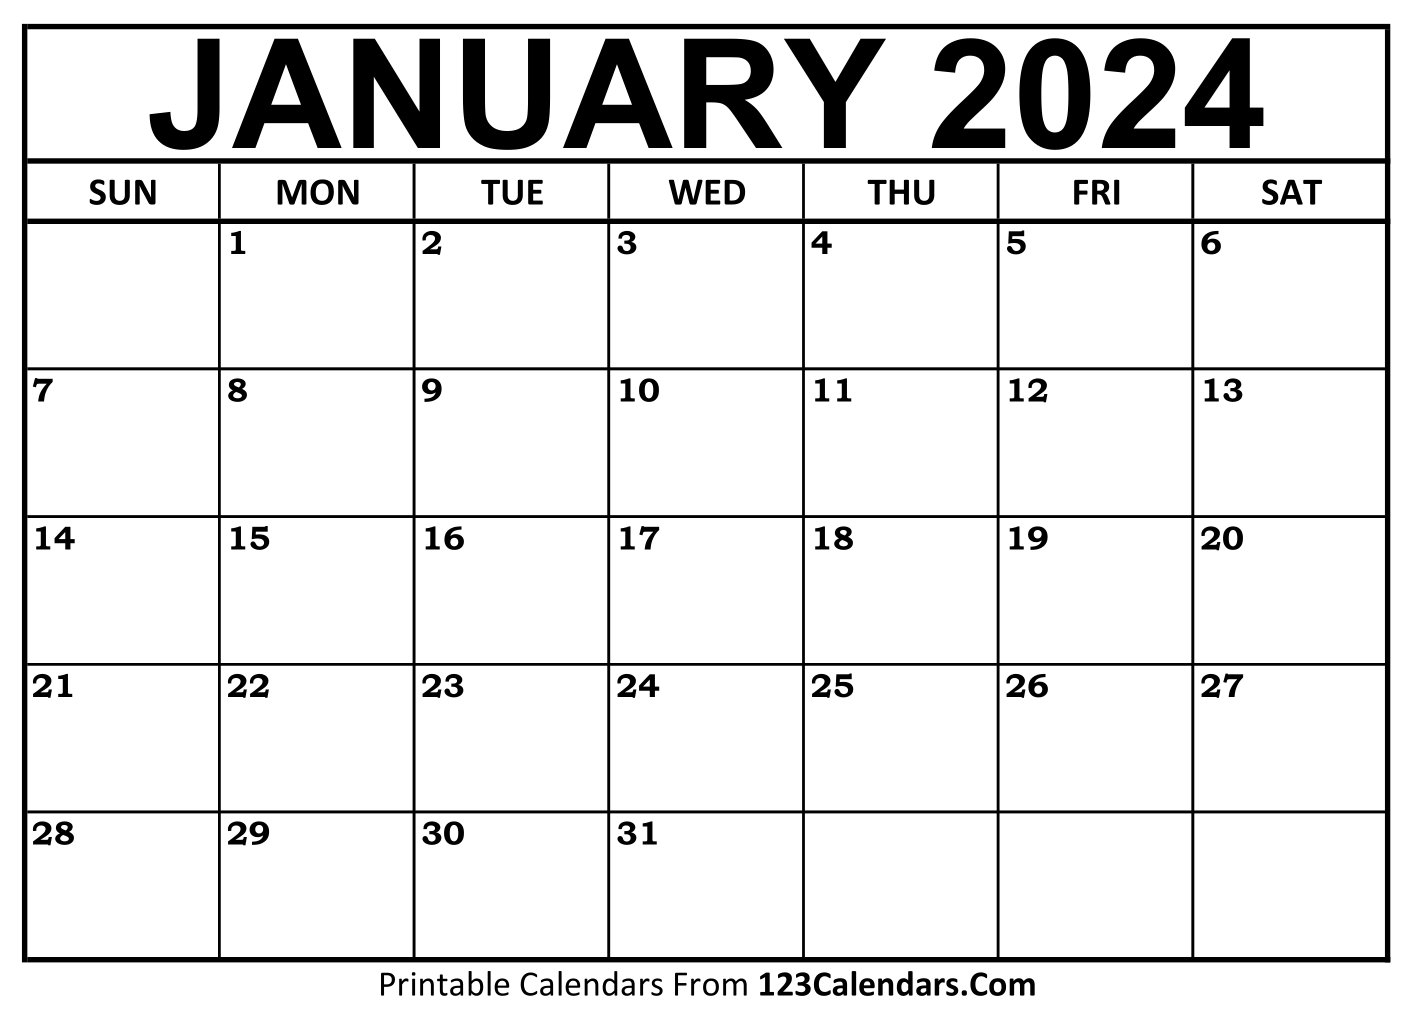 Printable January 2024 Calendar Templates - 123Calendars for Free January Calendar 2024 Printable